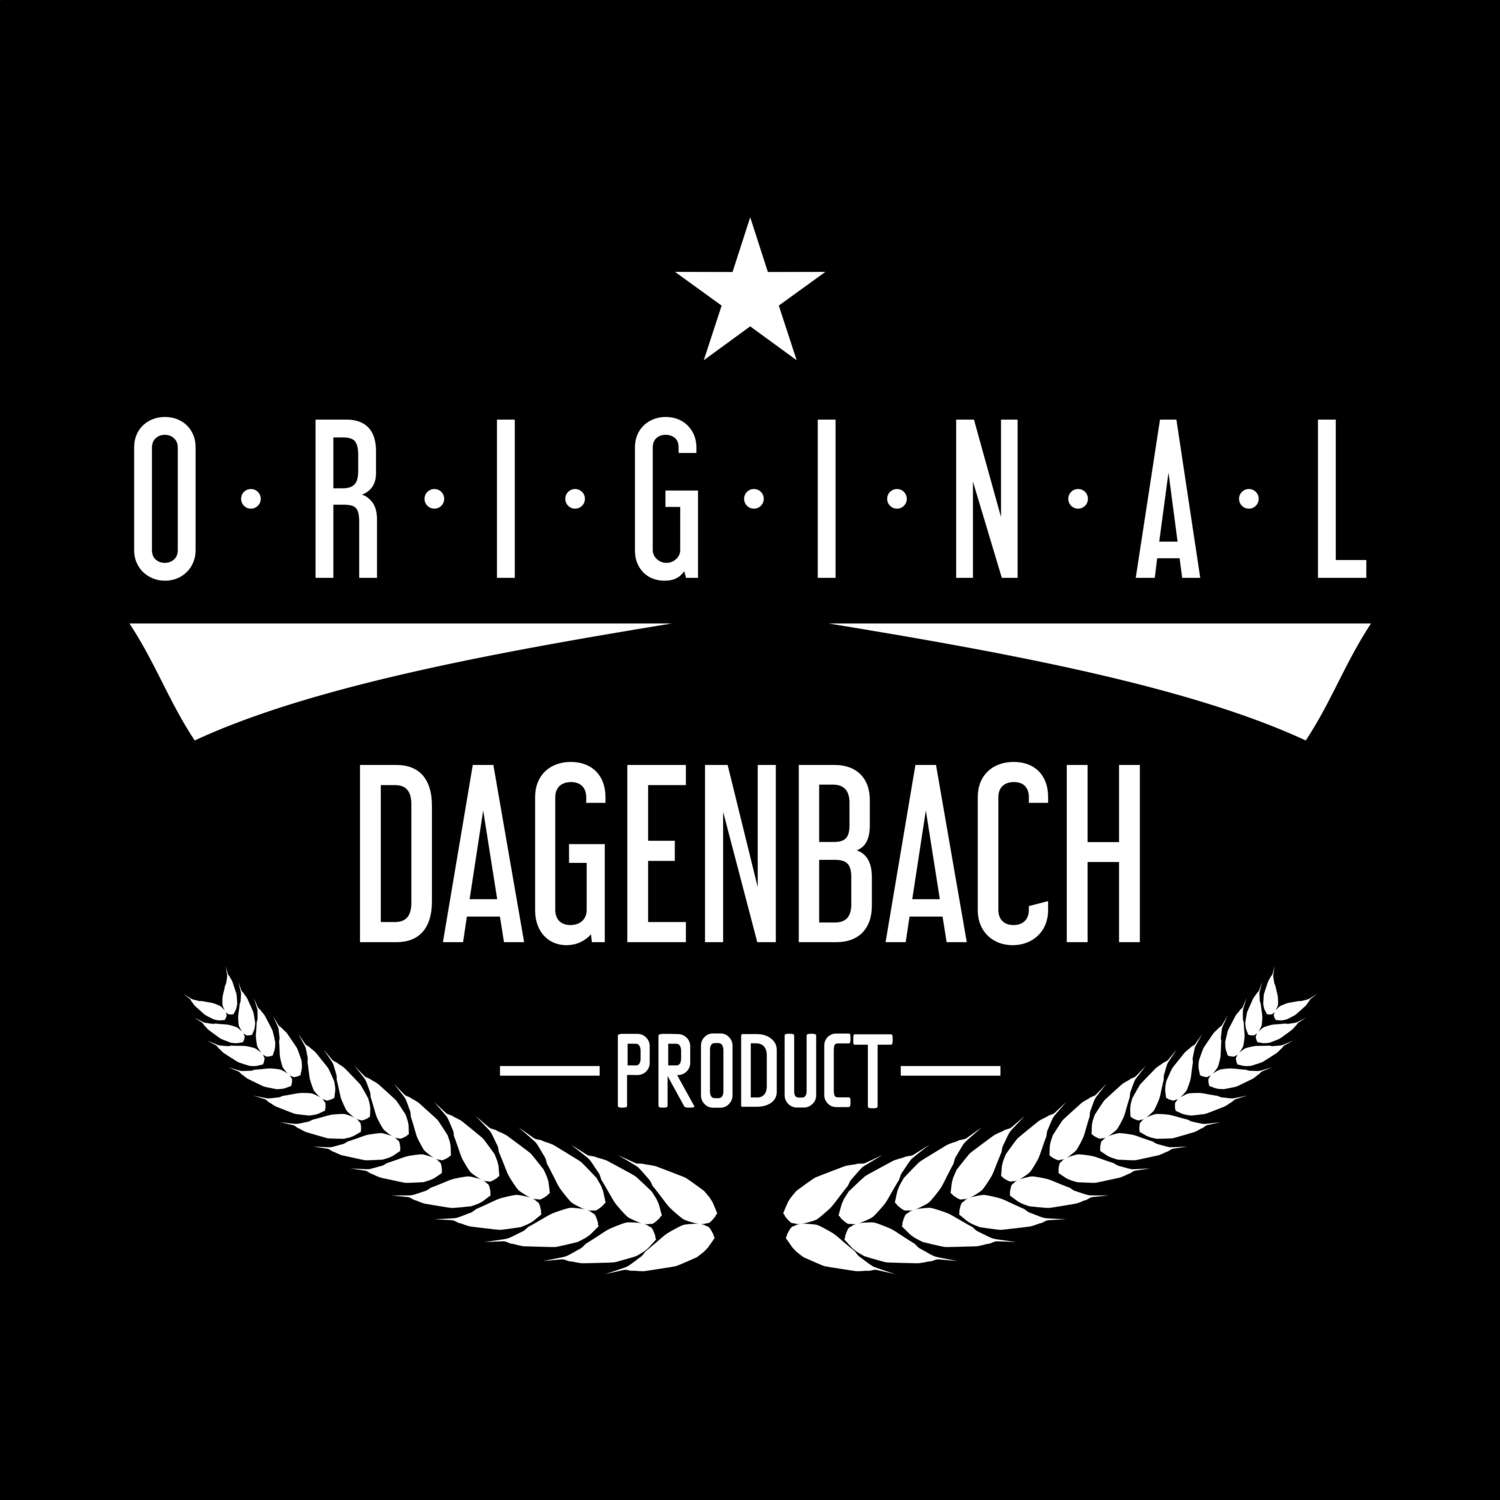 Dagenbach T-Shirt »Original Product«